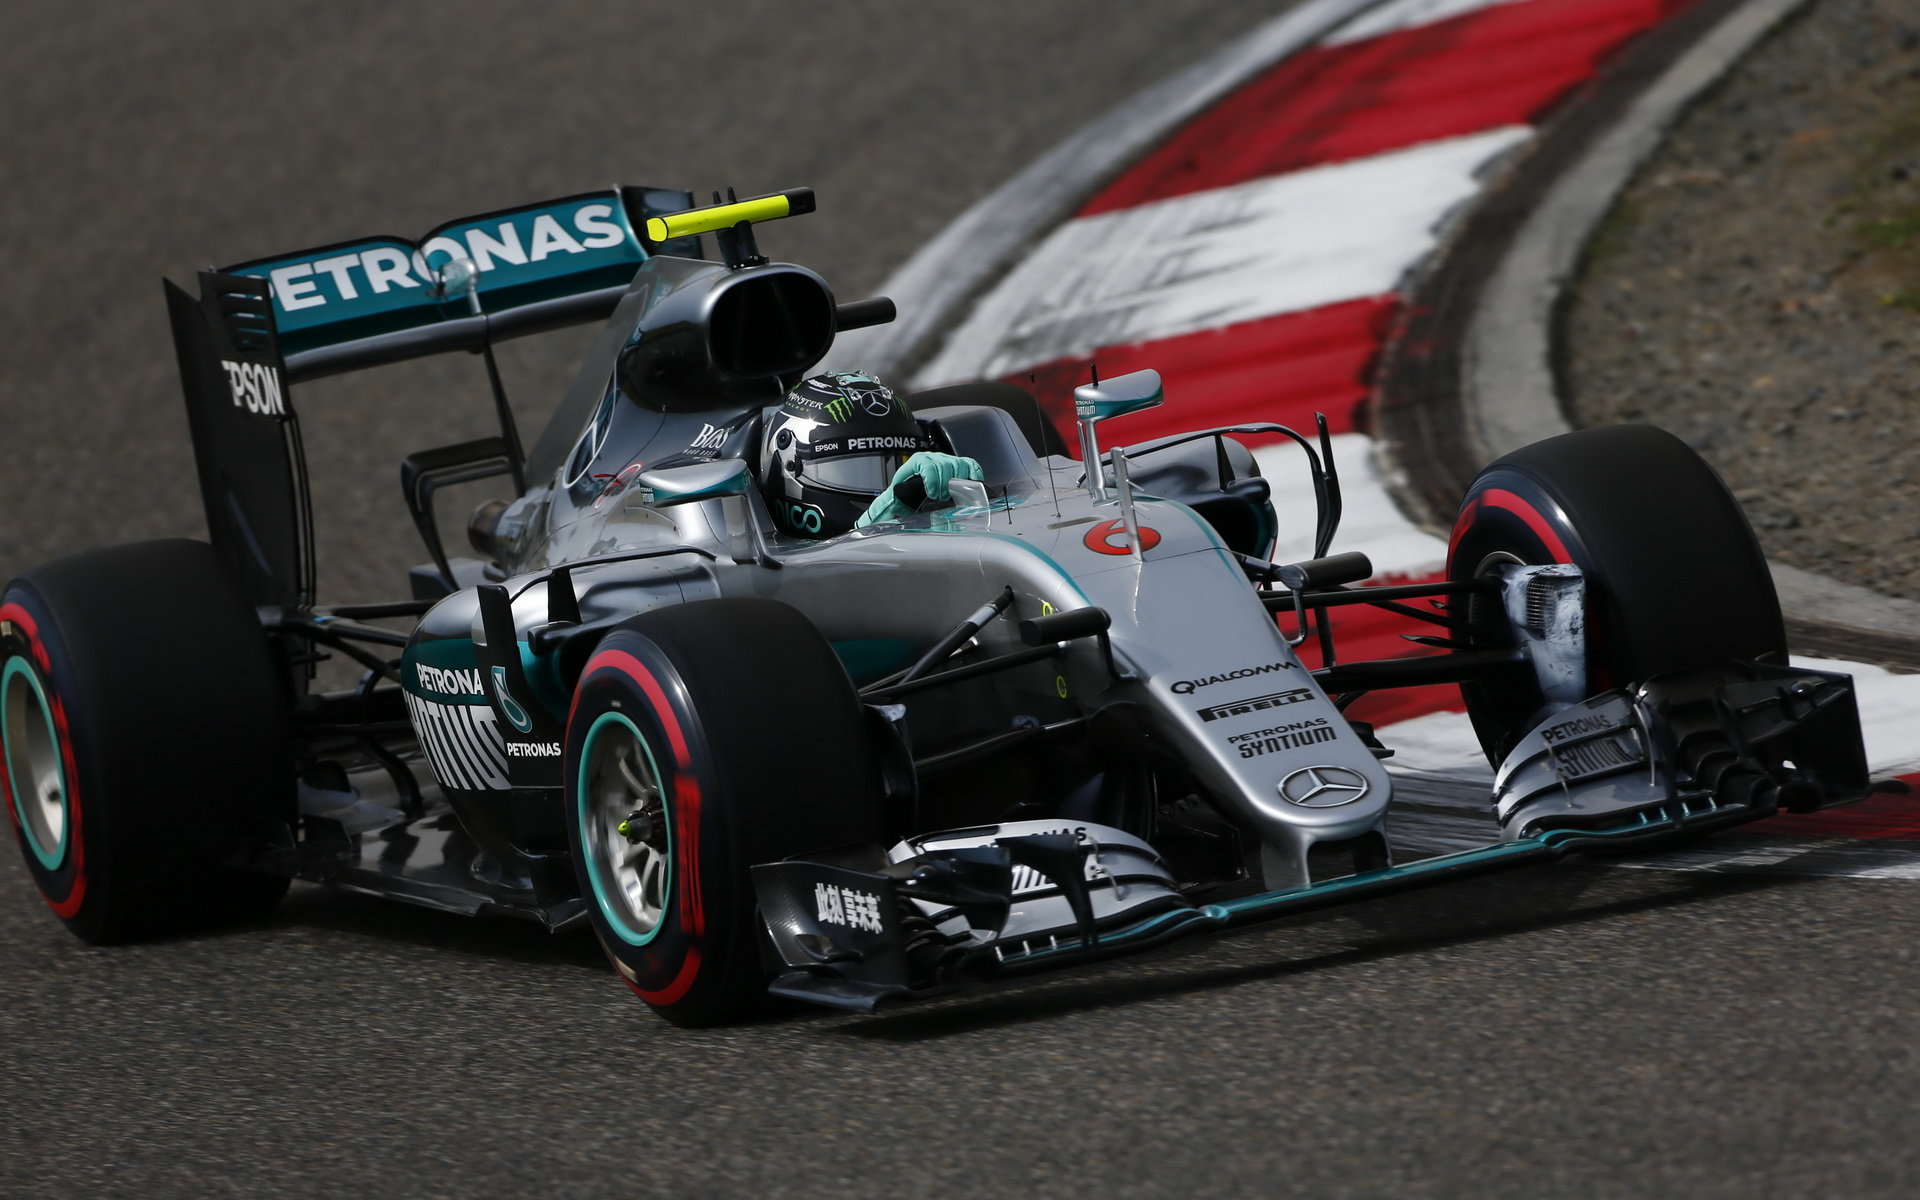 Nico Rosberg v kvalifikaci v Číně